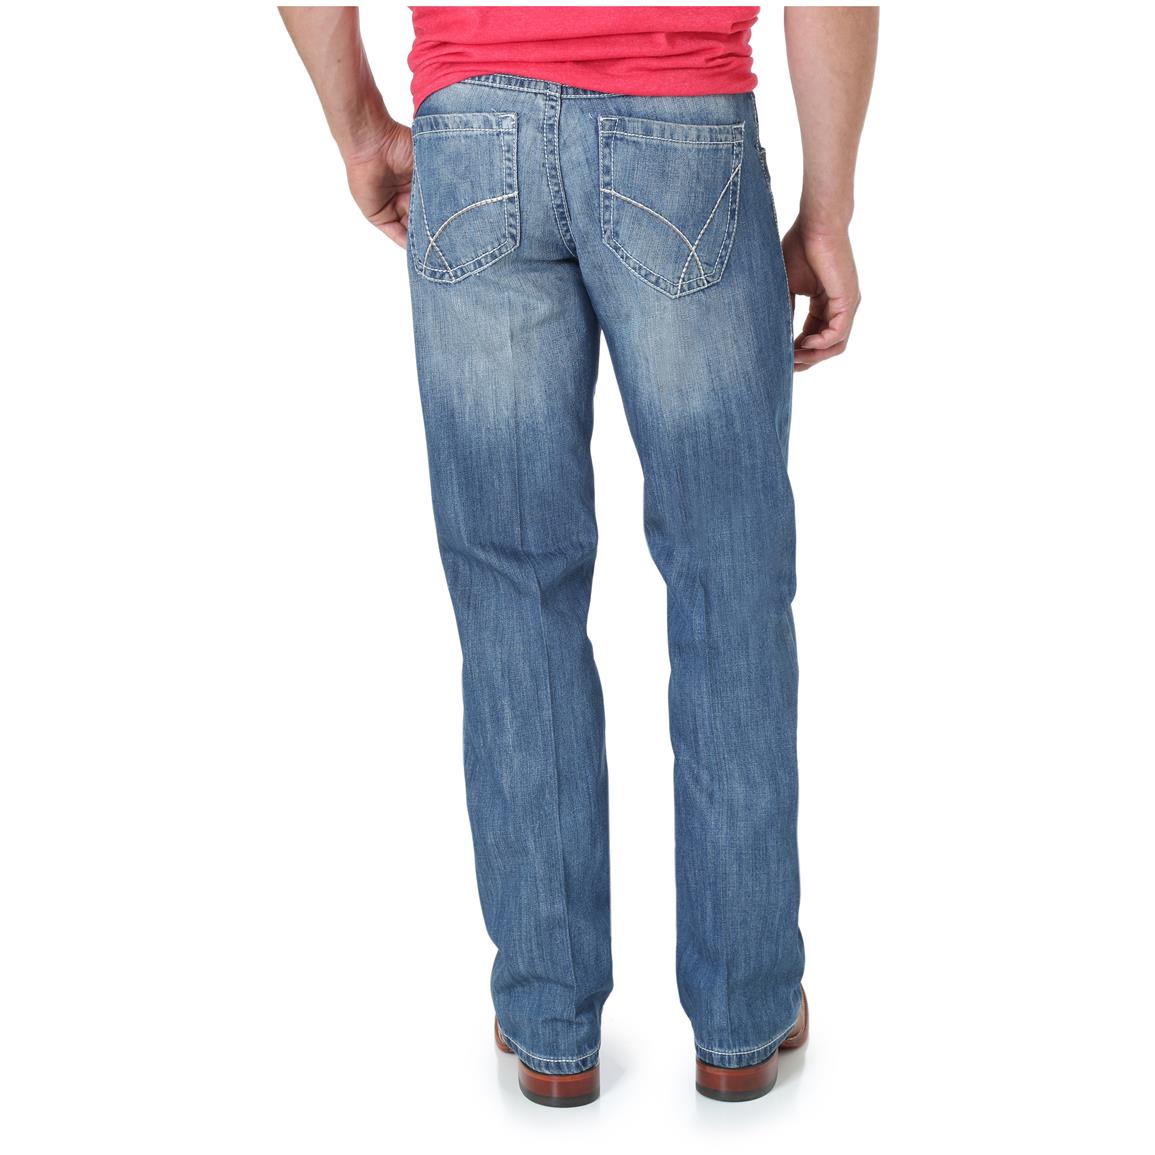 Wrangler Slim Fit Jeans | Sportsman's Guide